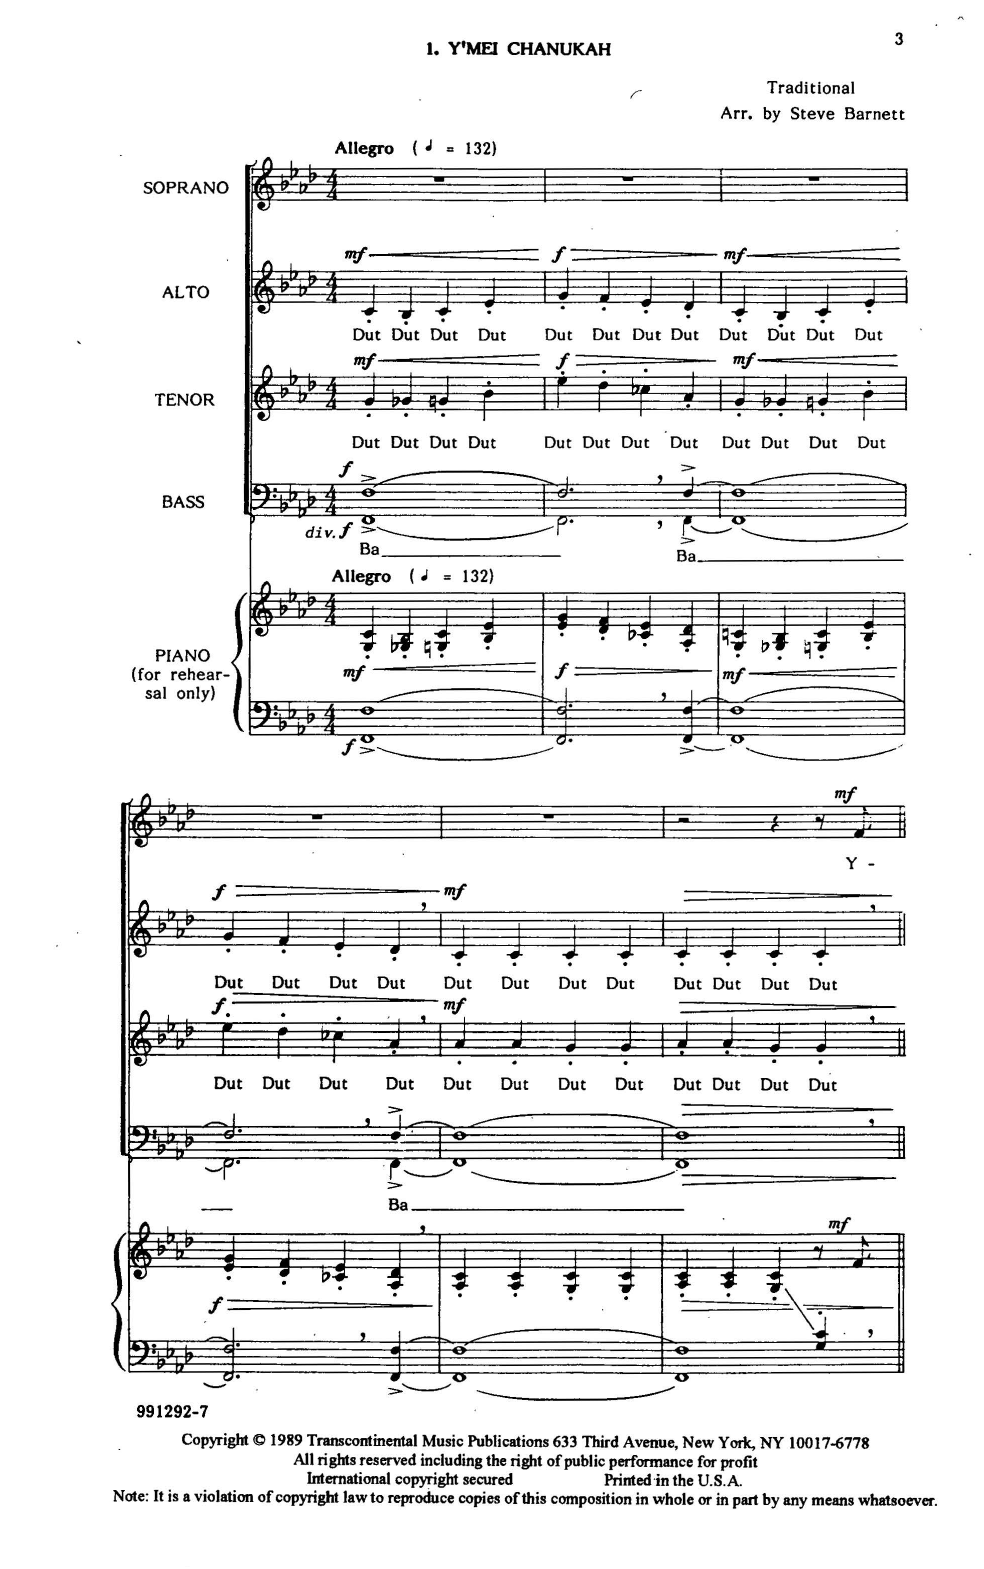 Steve Barnett Y'mei Chanukah Rehearsal Piano Sheet Music Notes & Chords for SATB Choir - Download or Print PDF